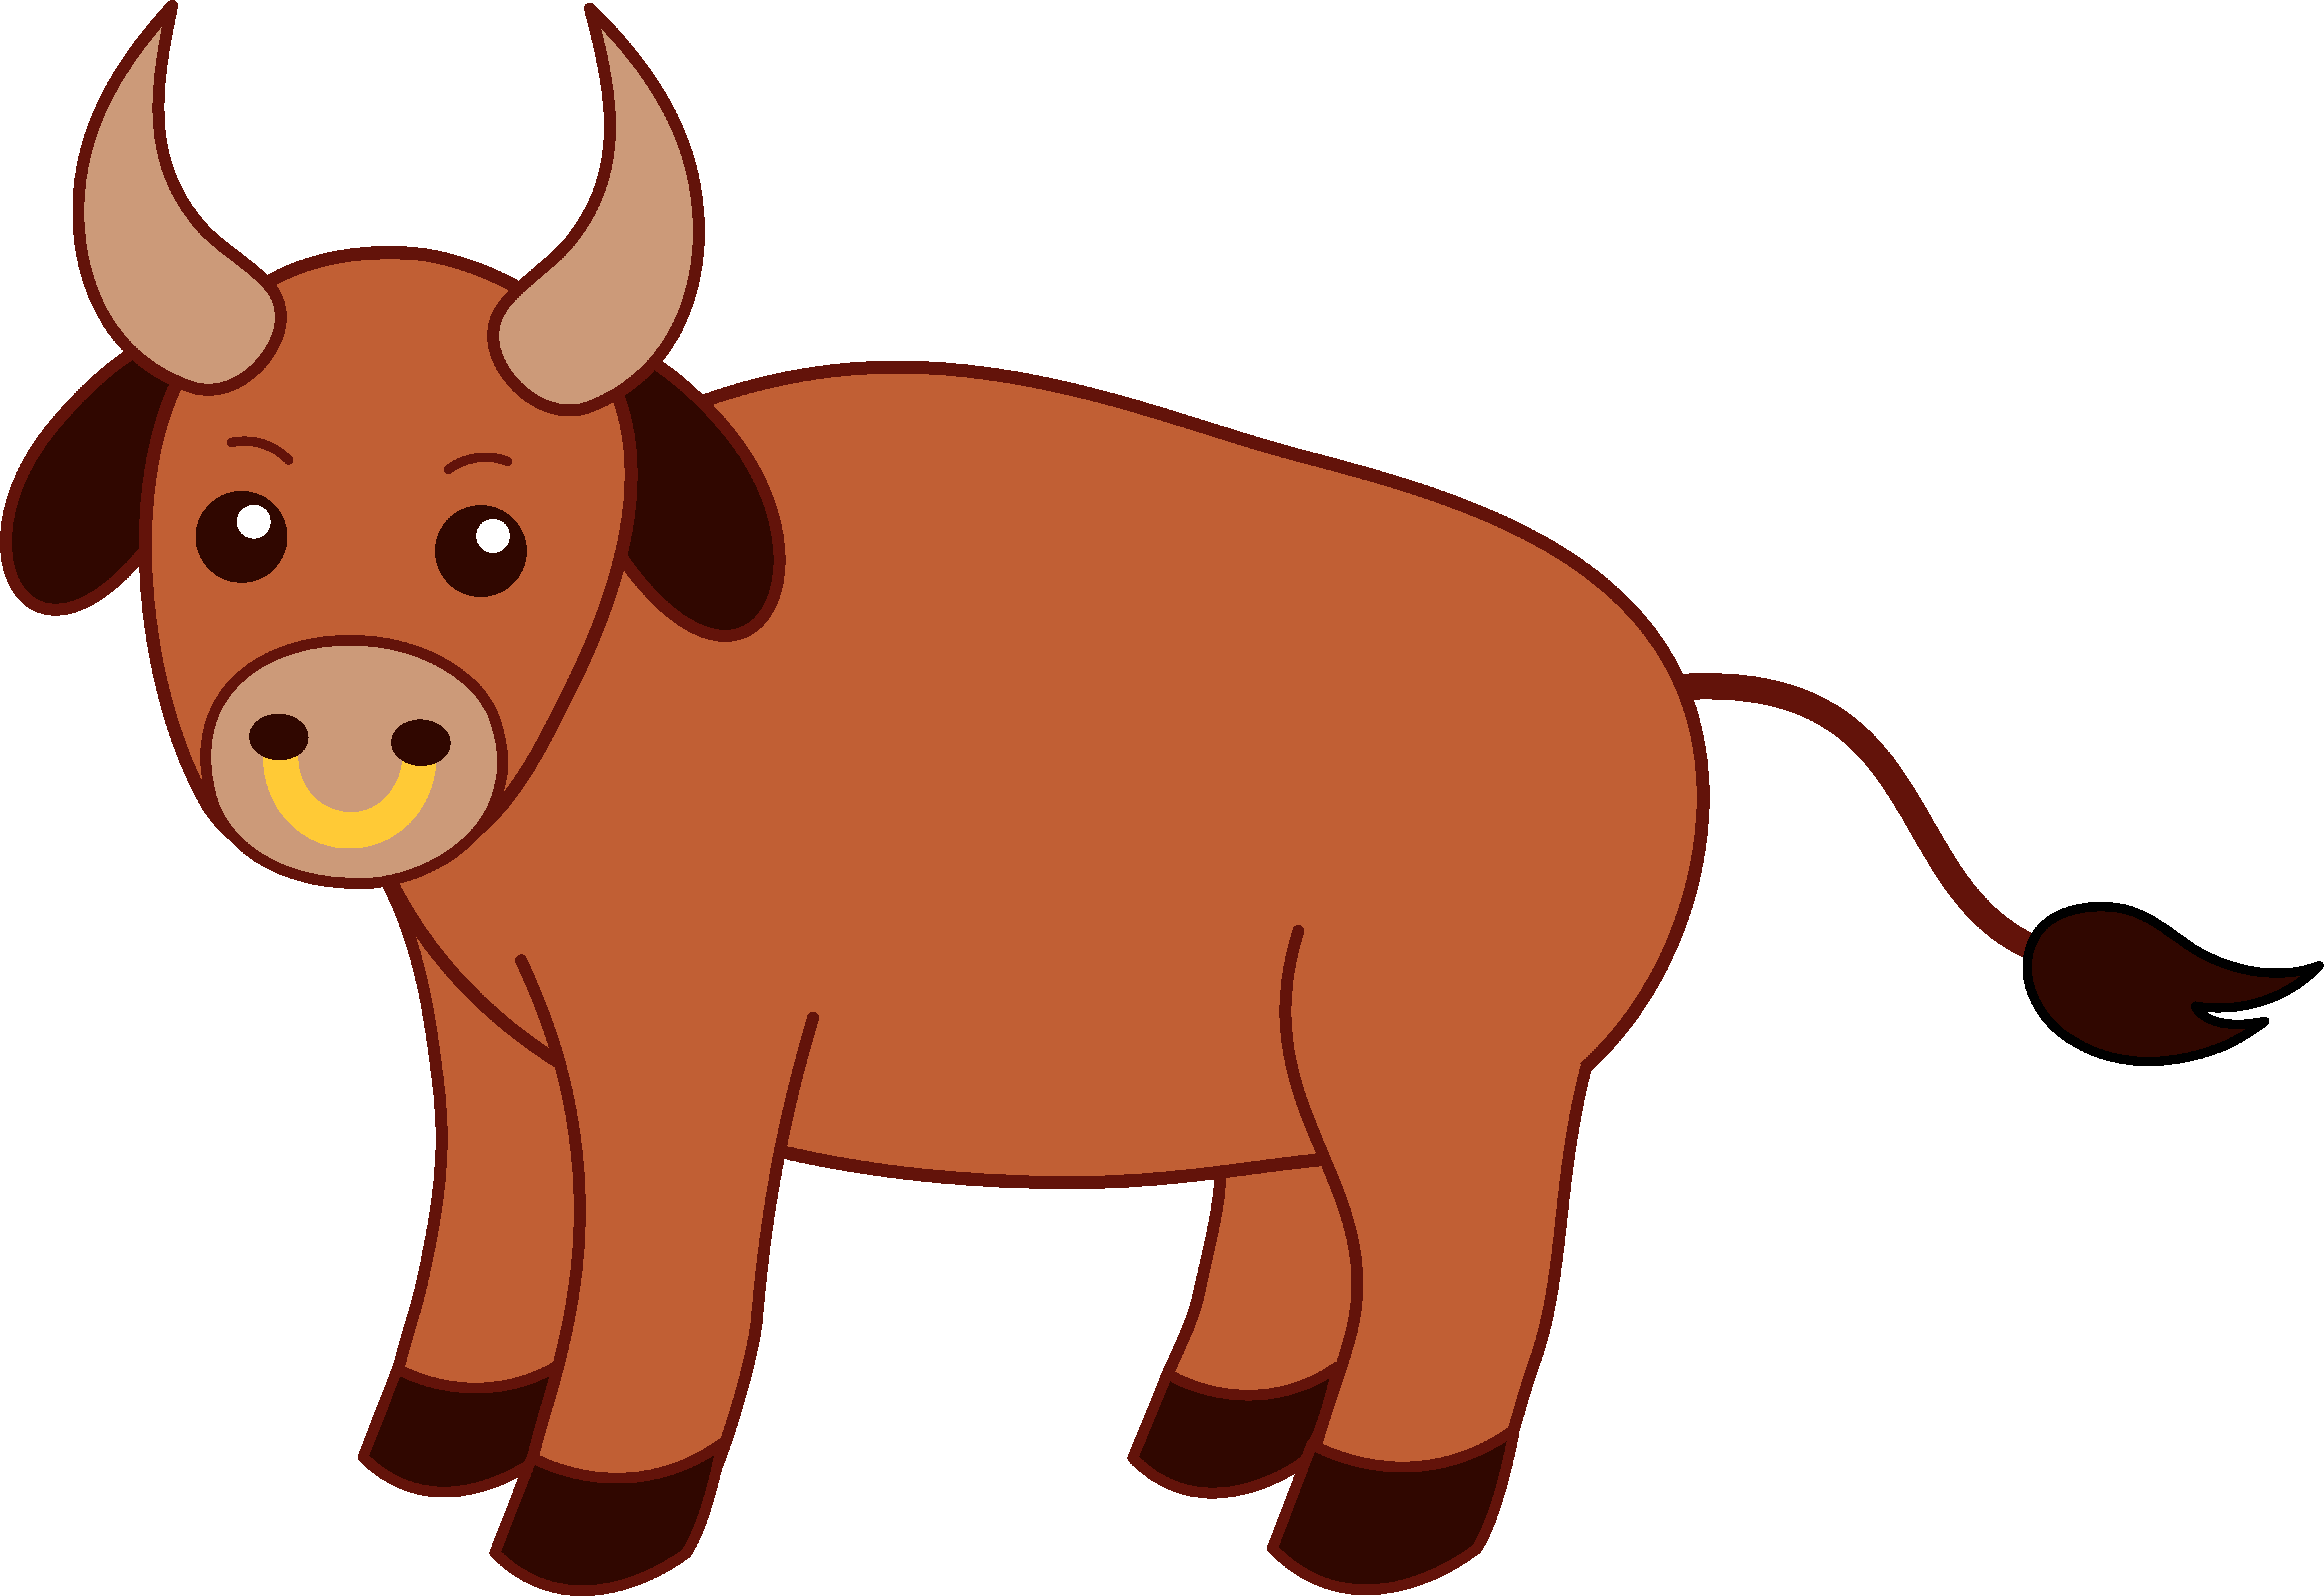 Cute brown buffalo.